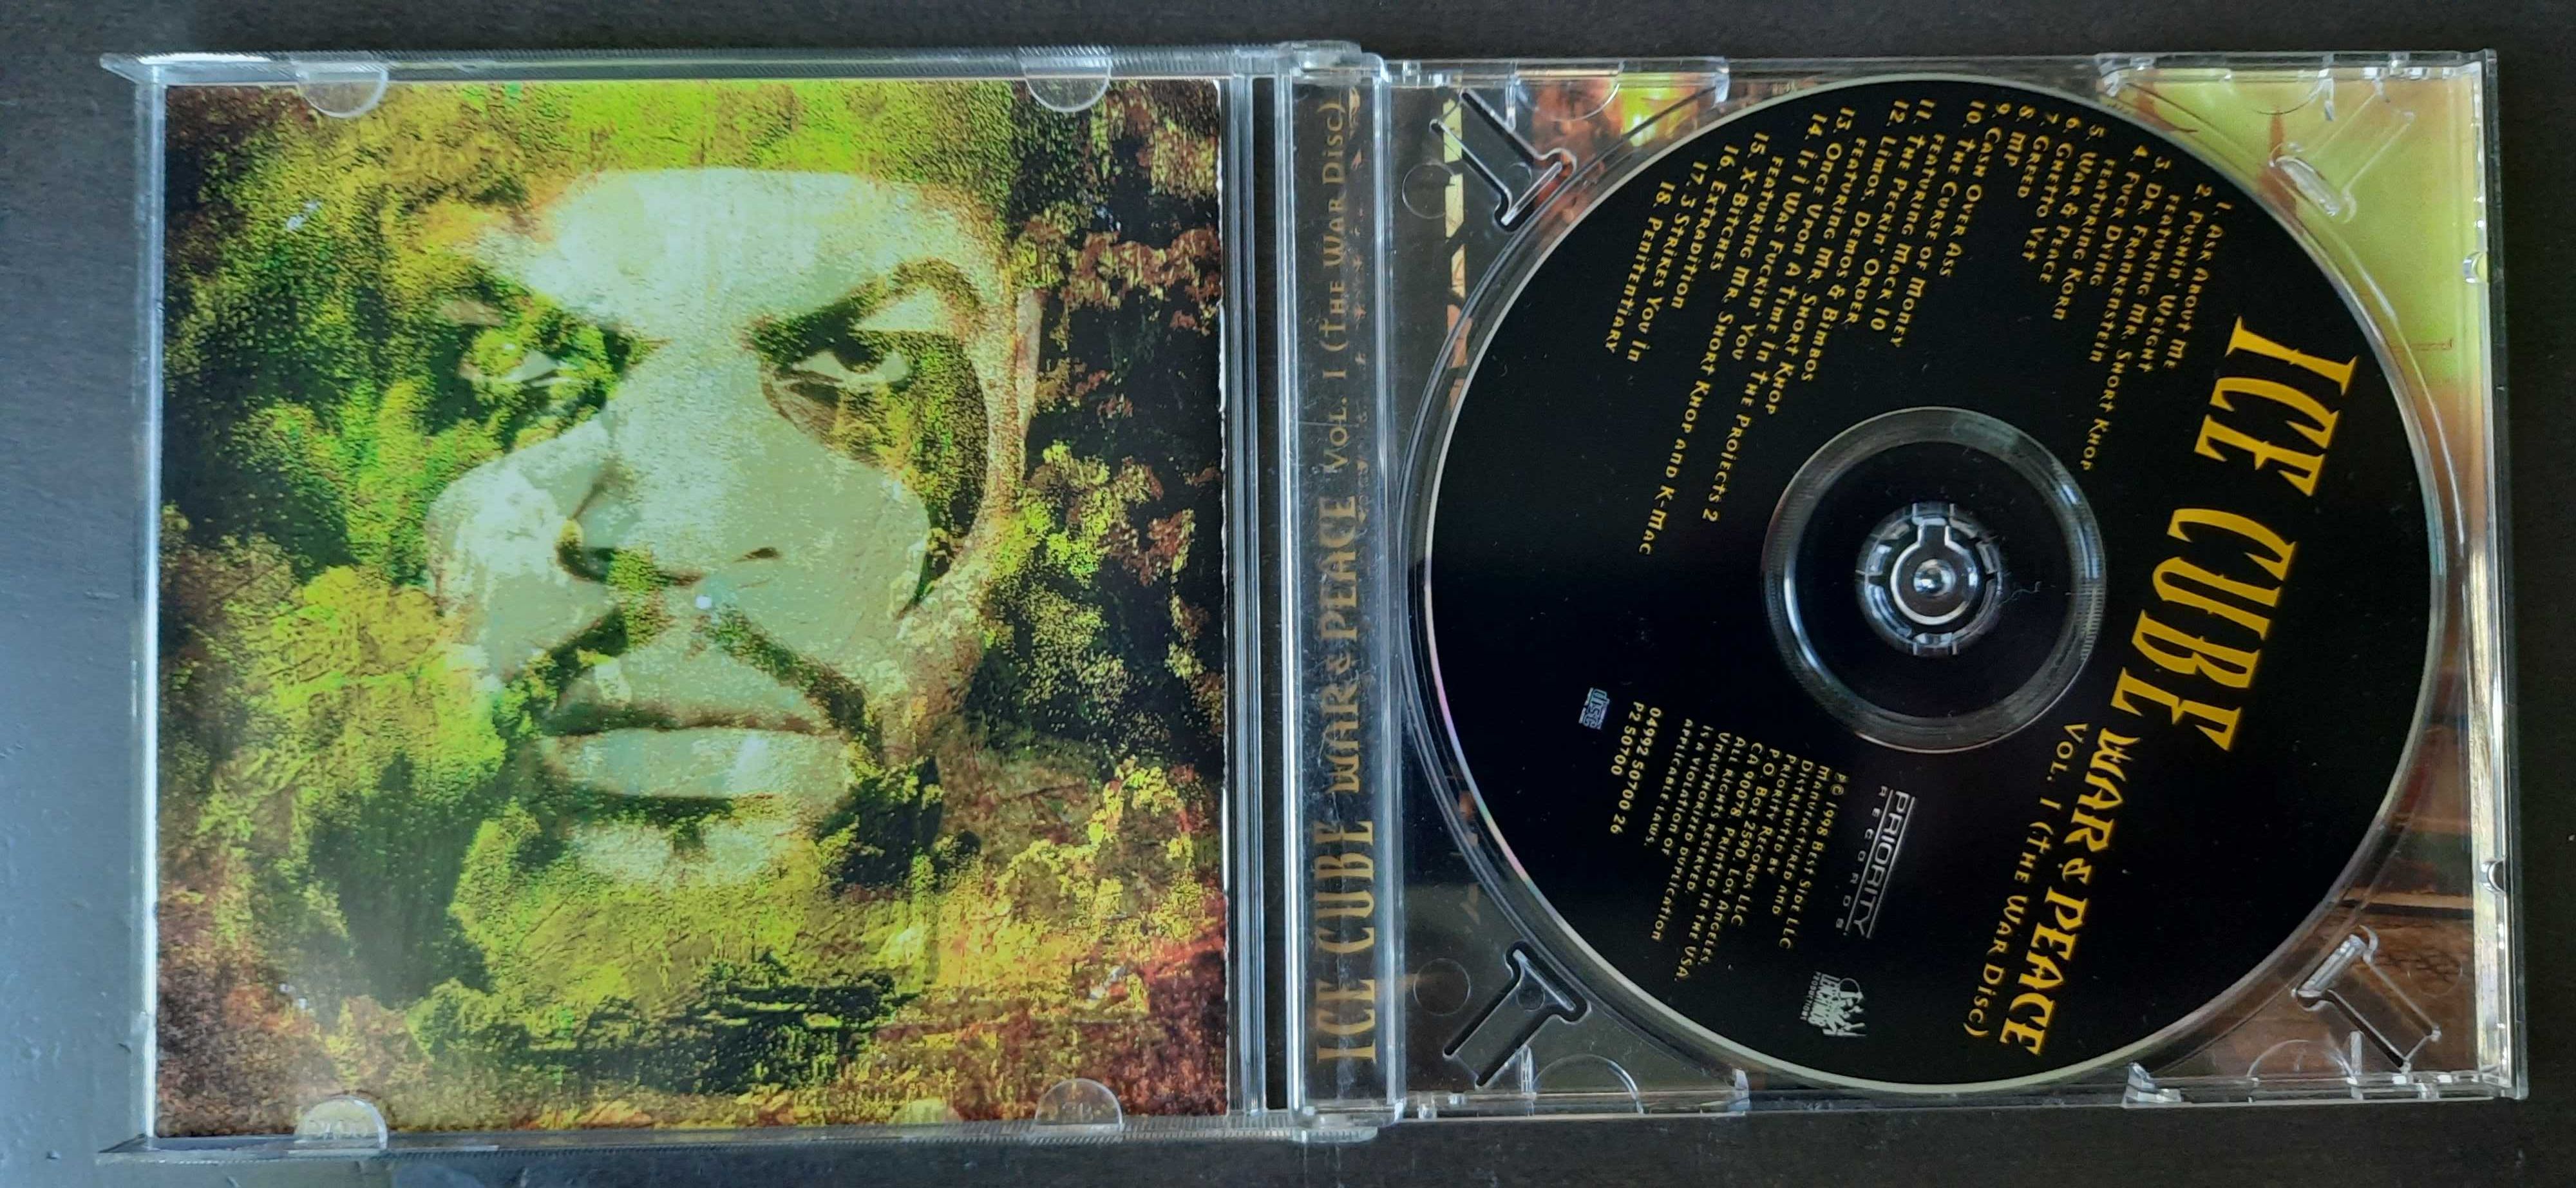 Ice Cube - War & Peace Vol. 1 (The War Disc)
CD